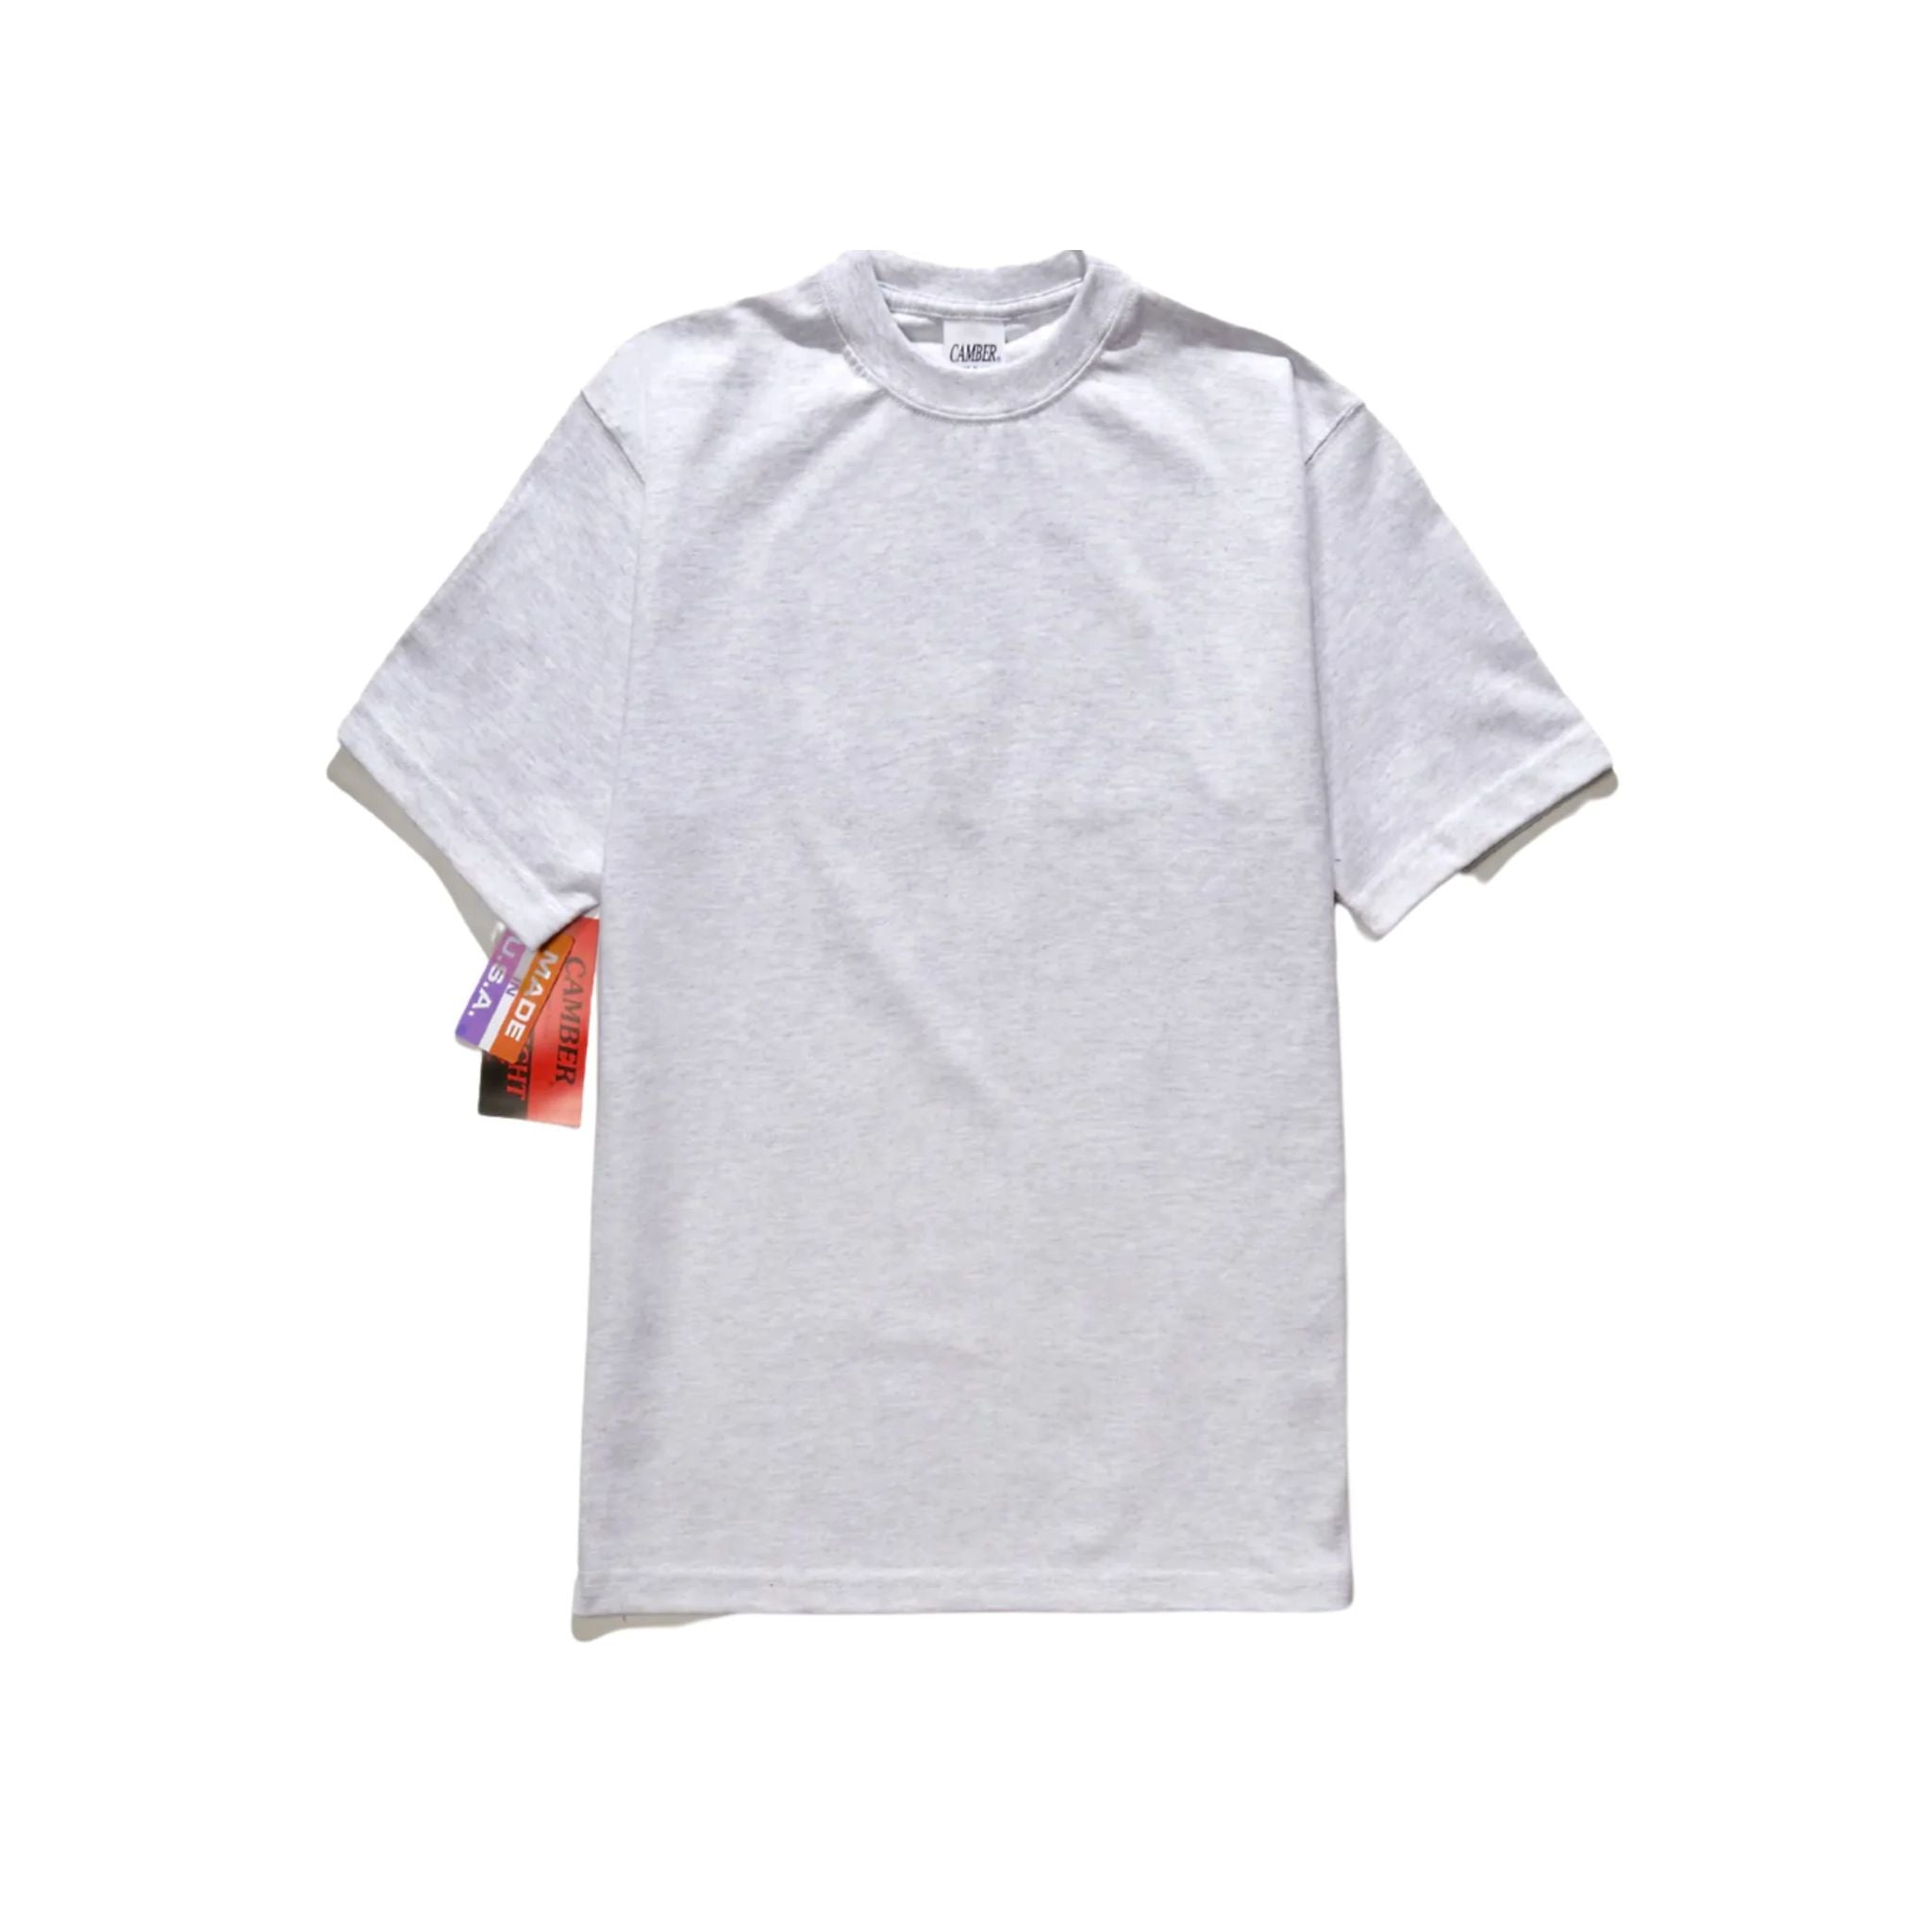 CAMBER USA Binario09 Finest Grey 6OZ – - T-Shirt